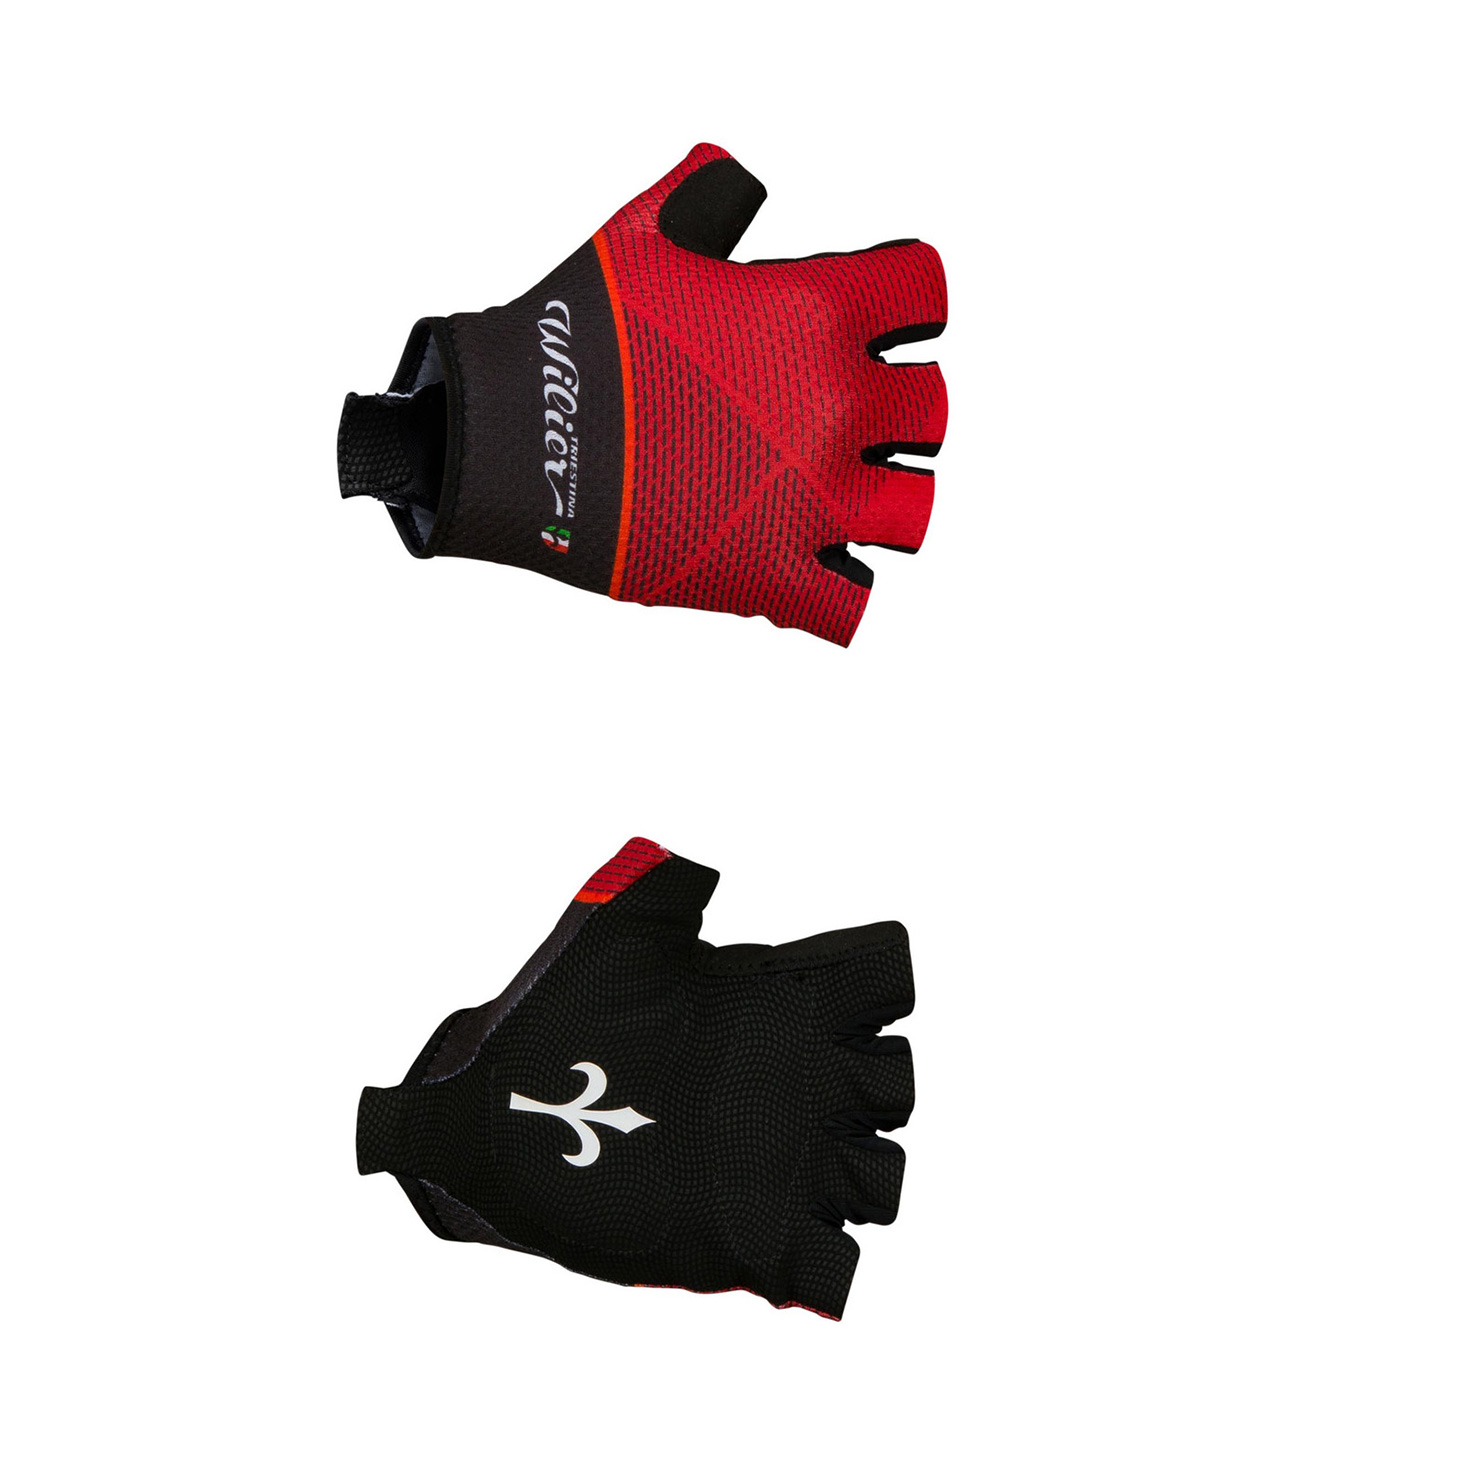 Brave Gloves red